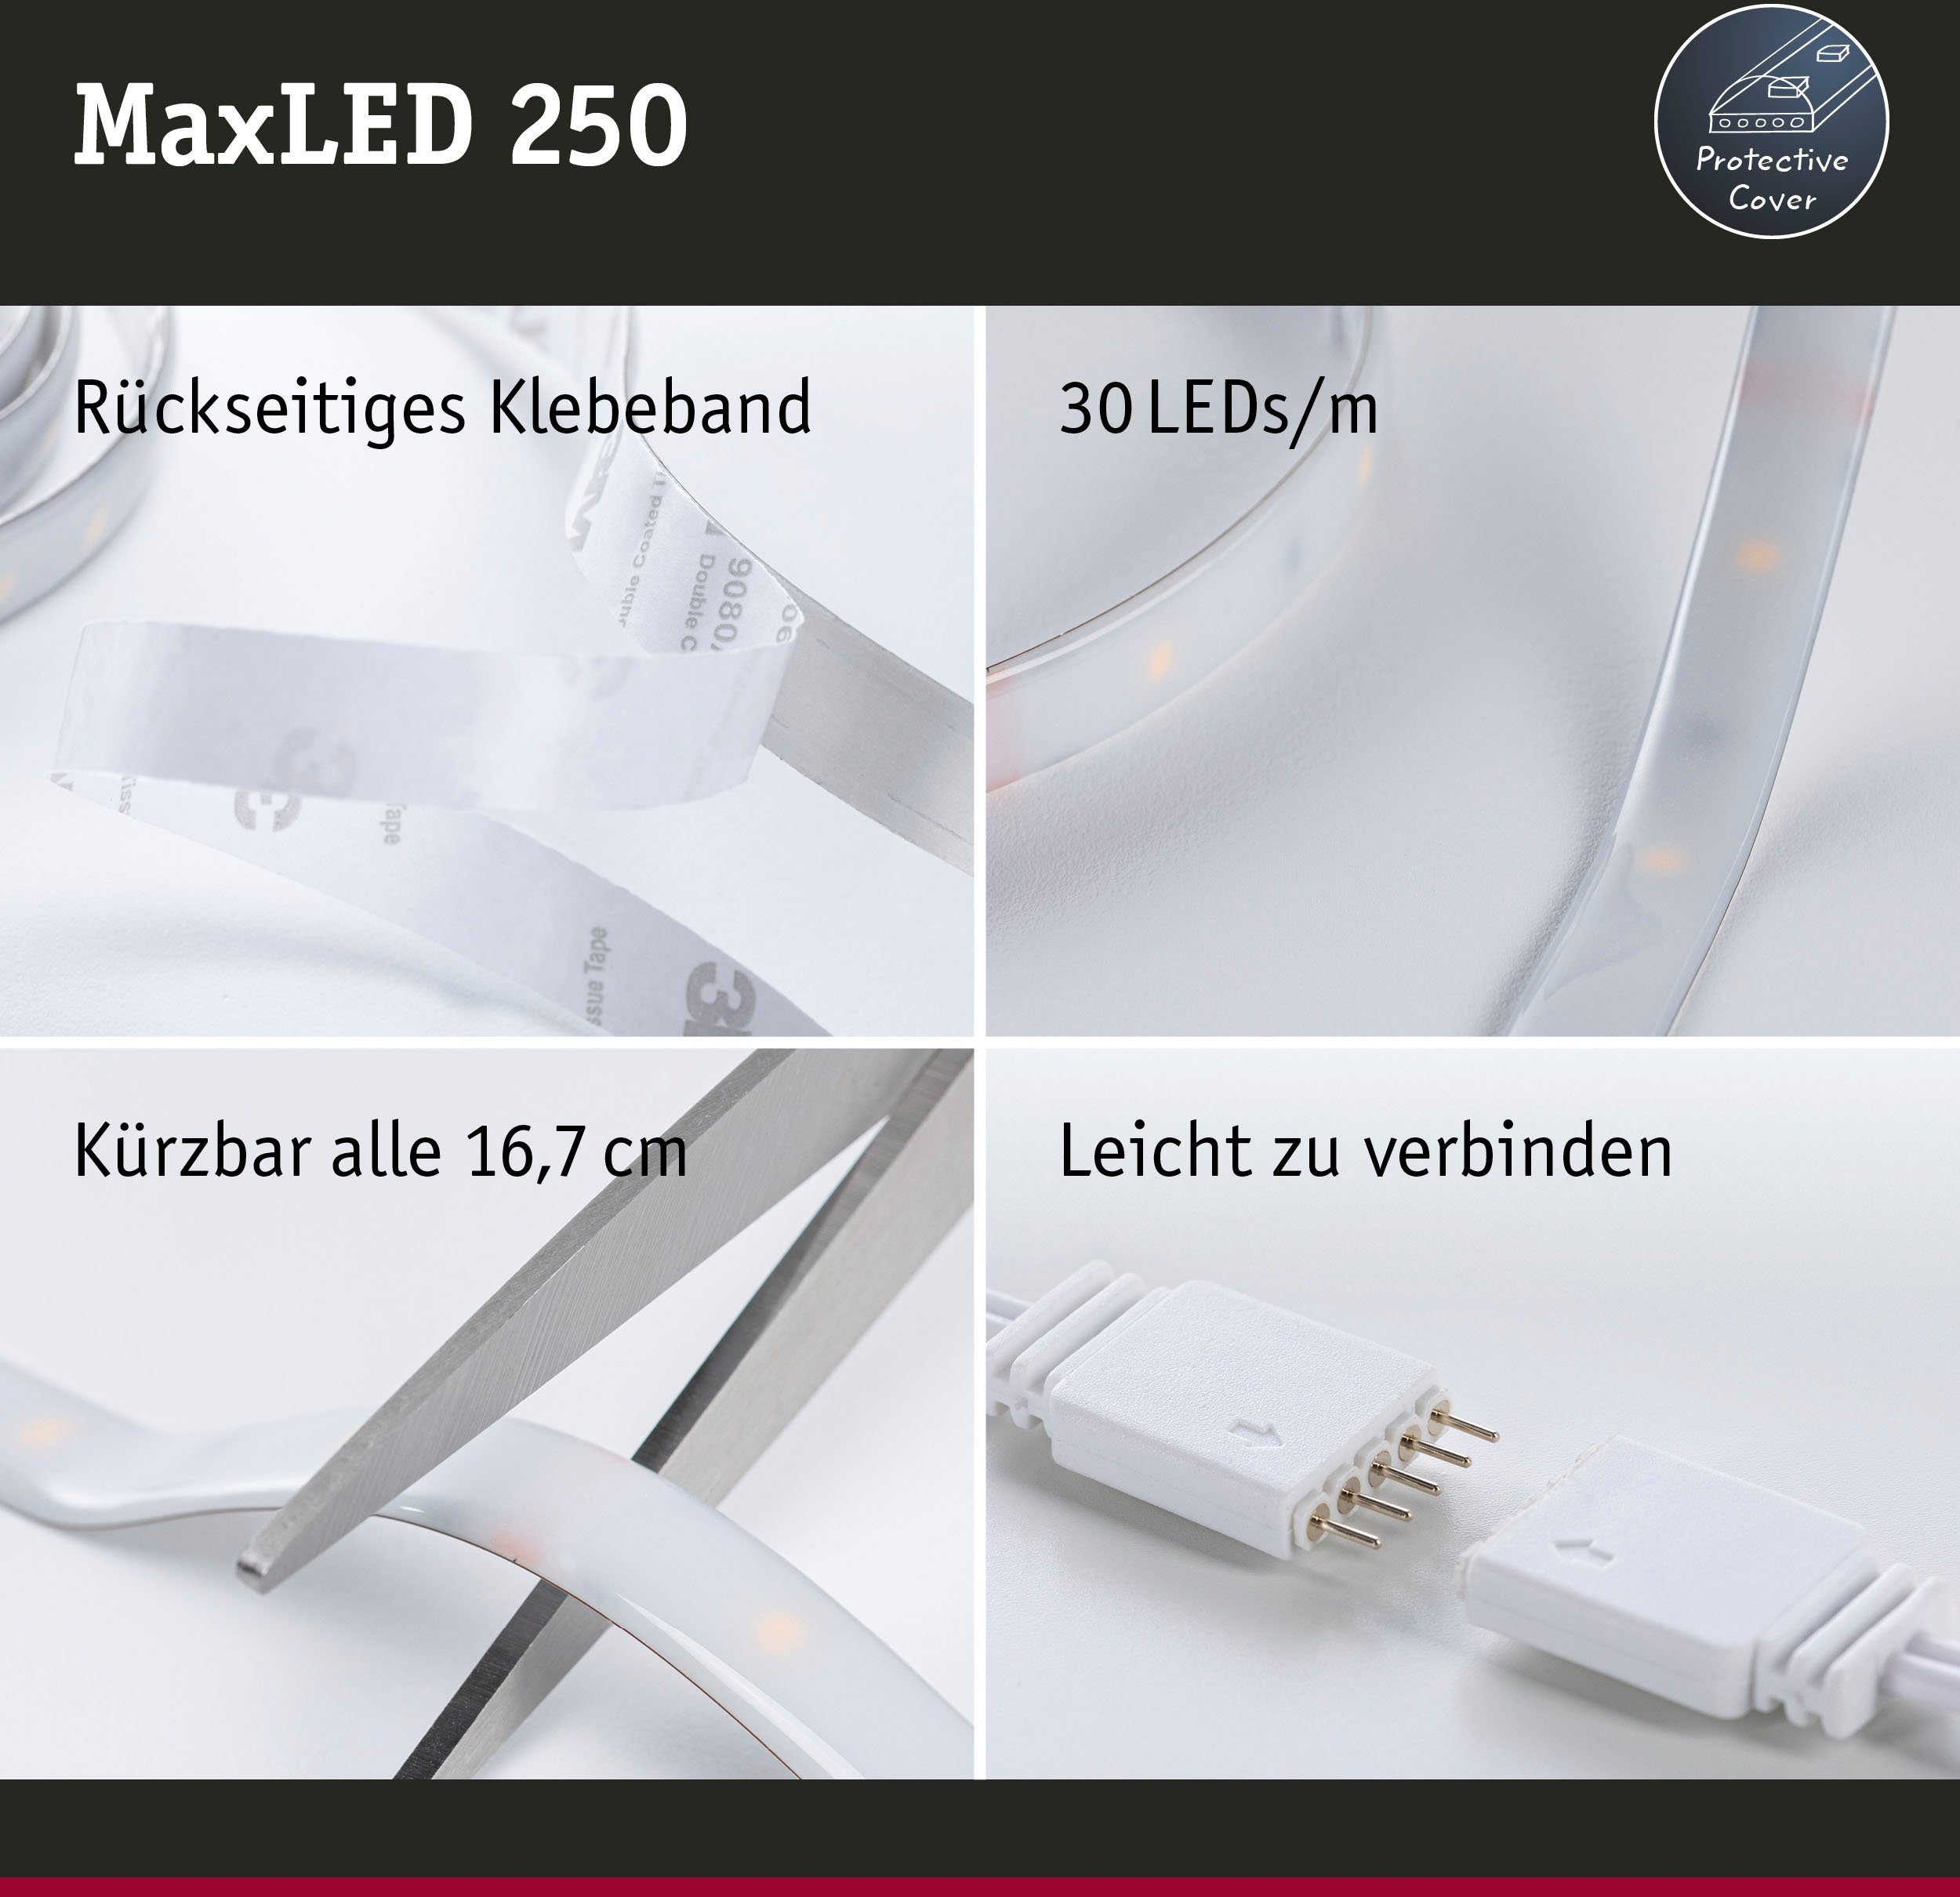 Paulmann Smart 1,5m, Home White, IP44 LED-Streifen 250 6W beschichtet MaxLED 405l Tunable Zigbee Basisset 405lm, 1-flammig,